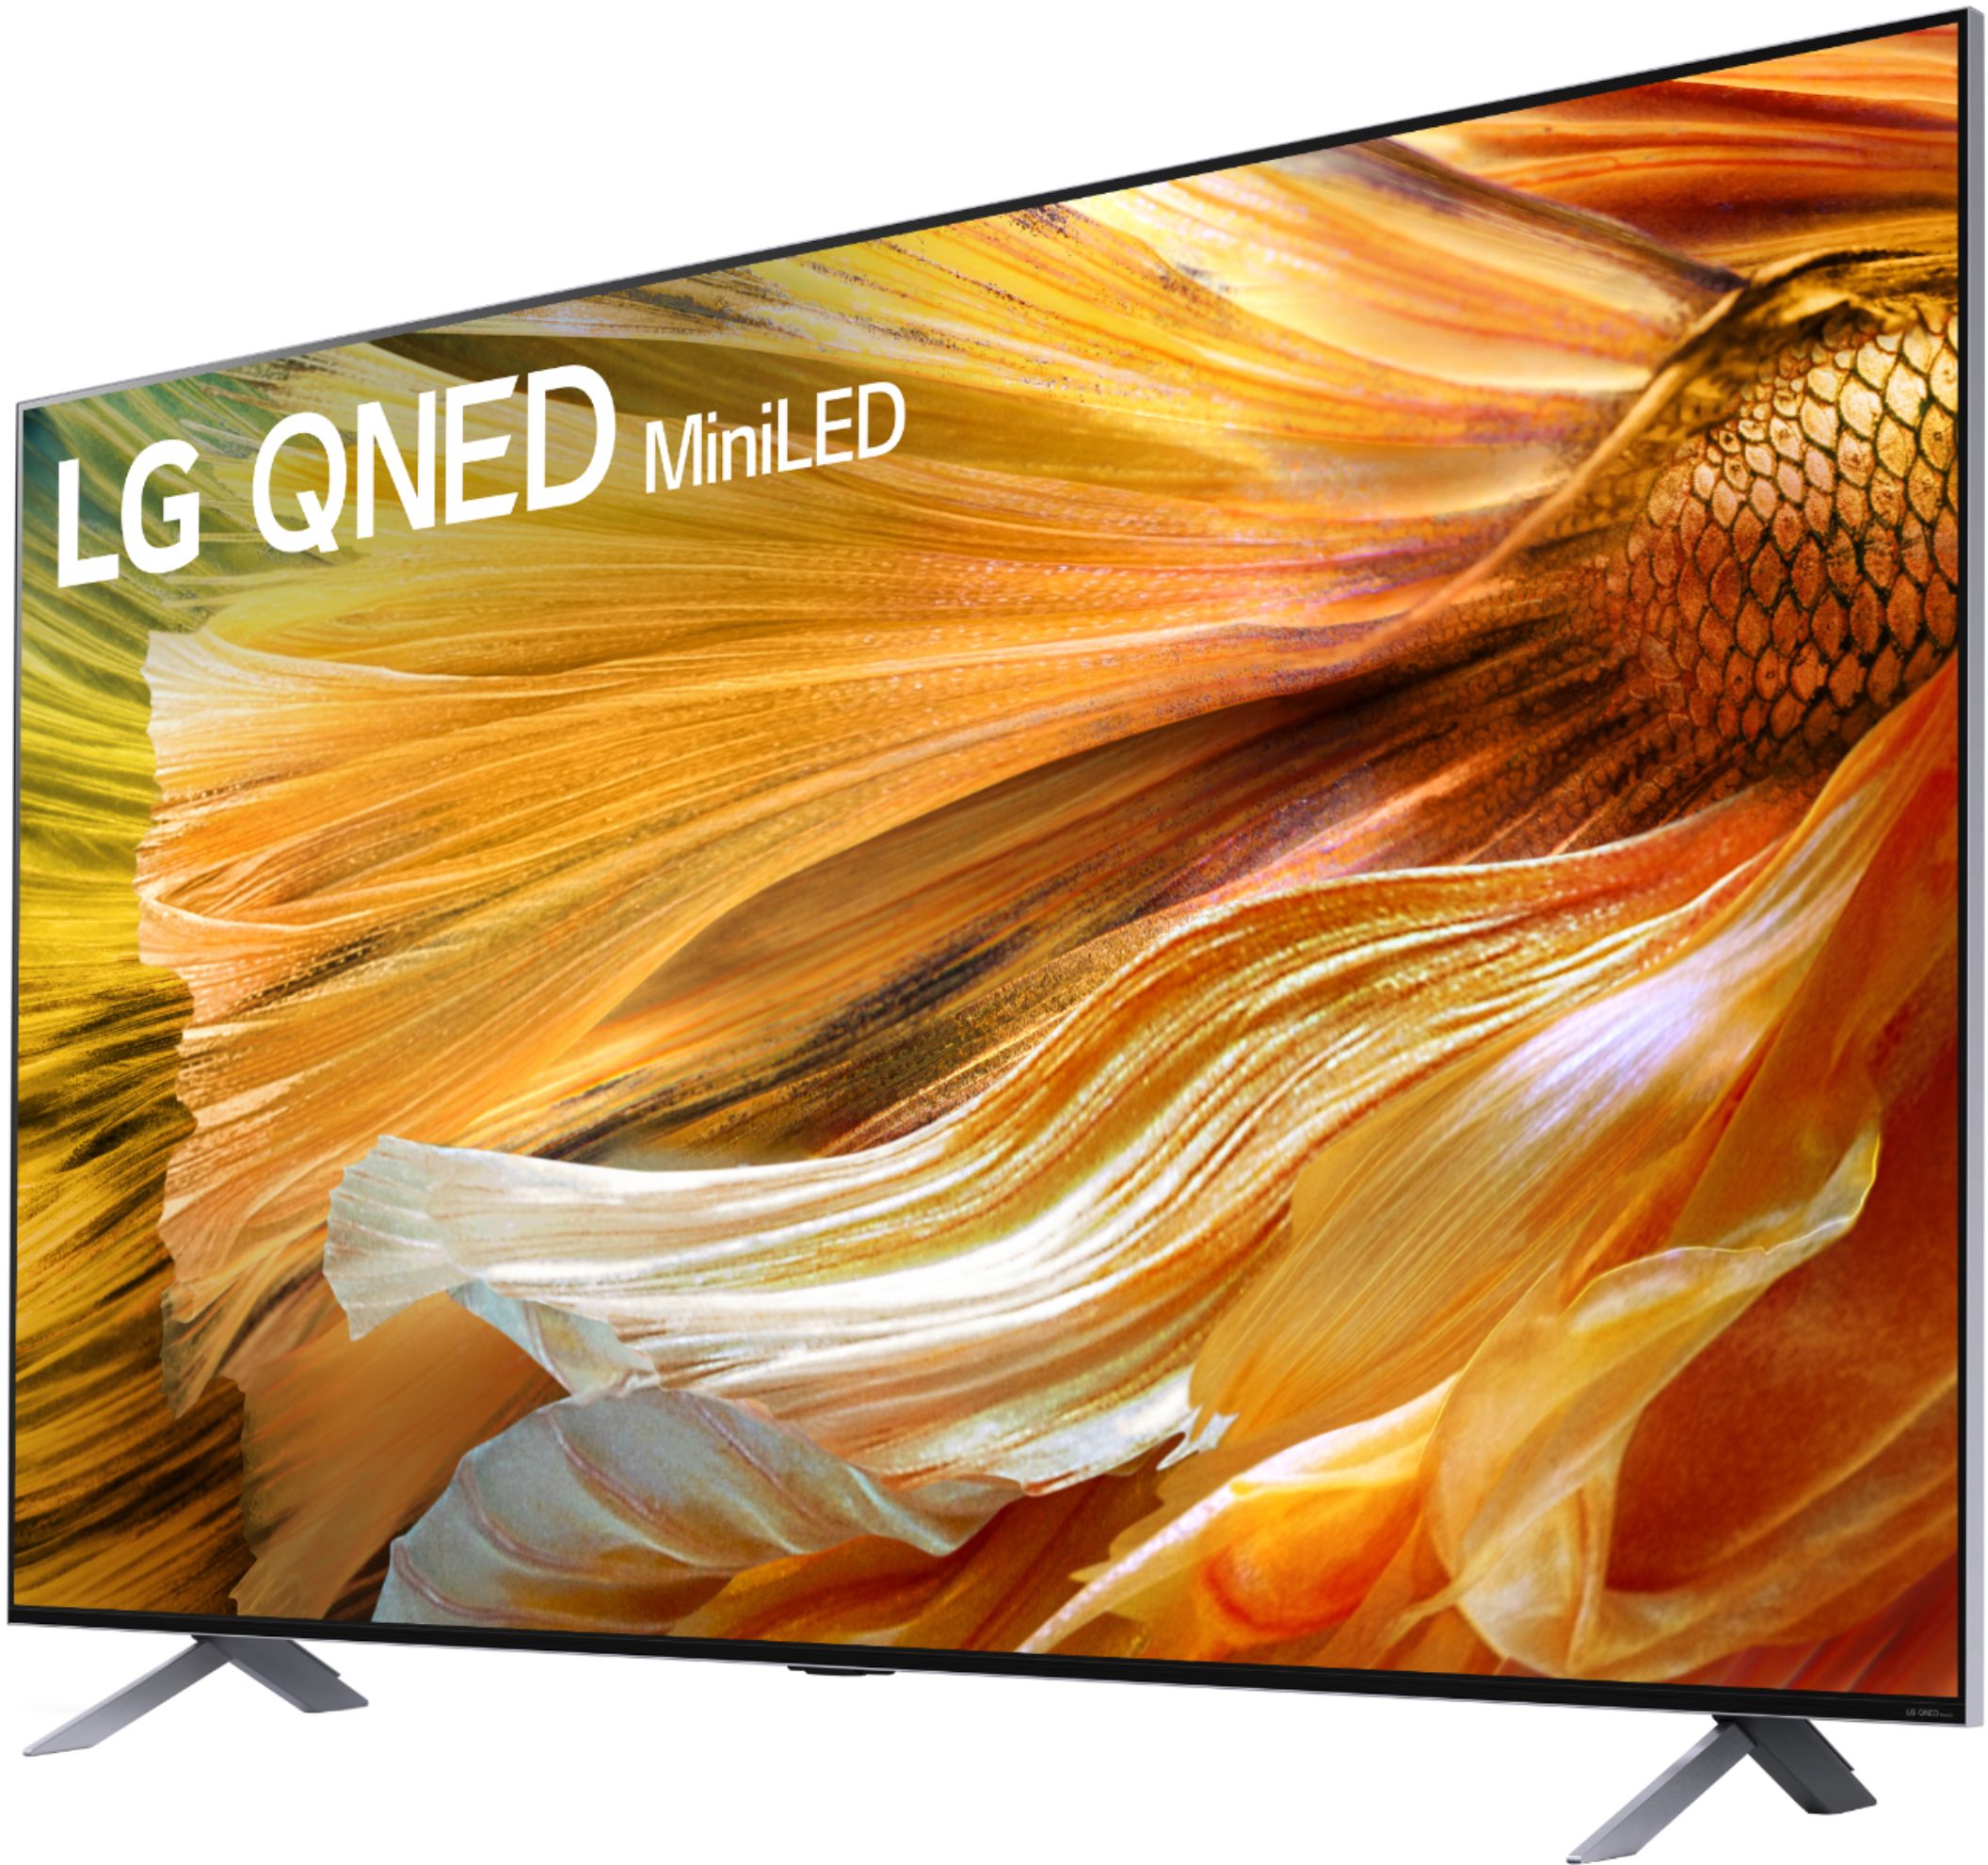 Comprar TV LG 8K QNED MiniLED 164cm (65), serie QNED 96 - Tienda LG